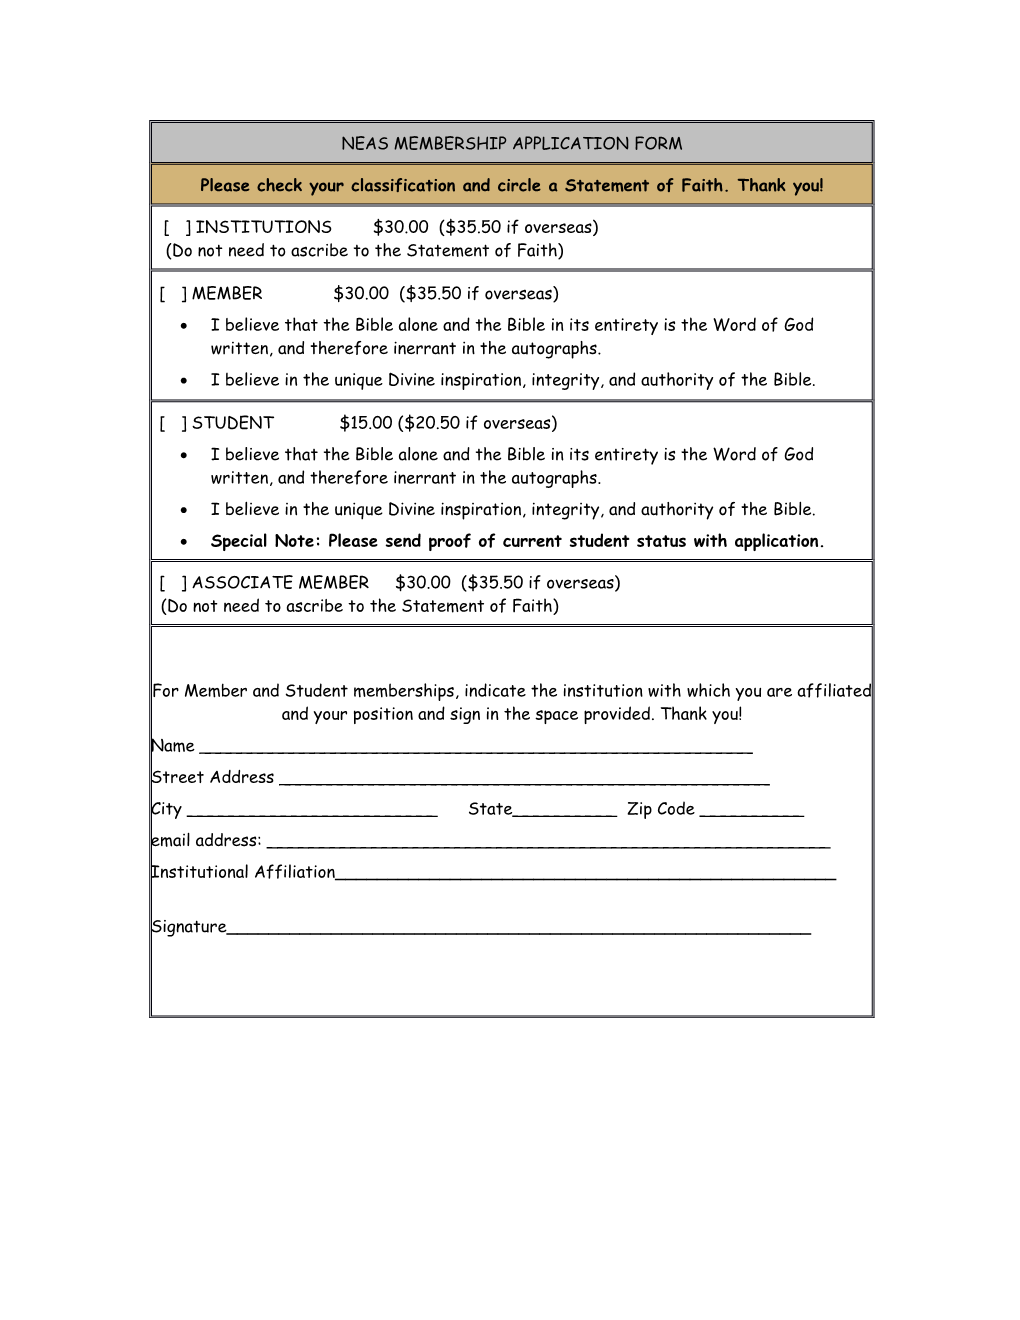 Neas Membership Application Form